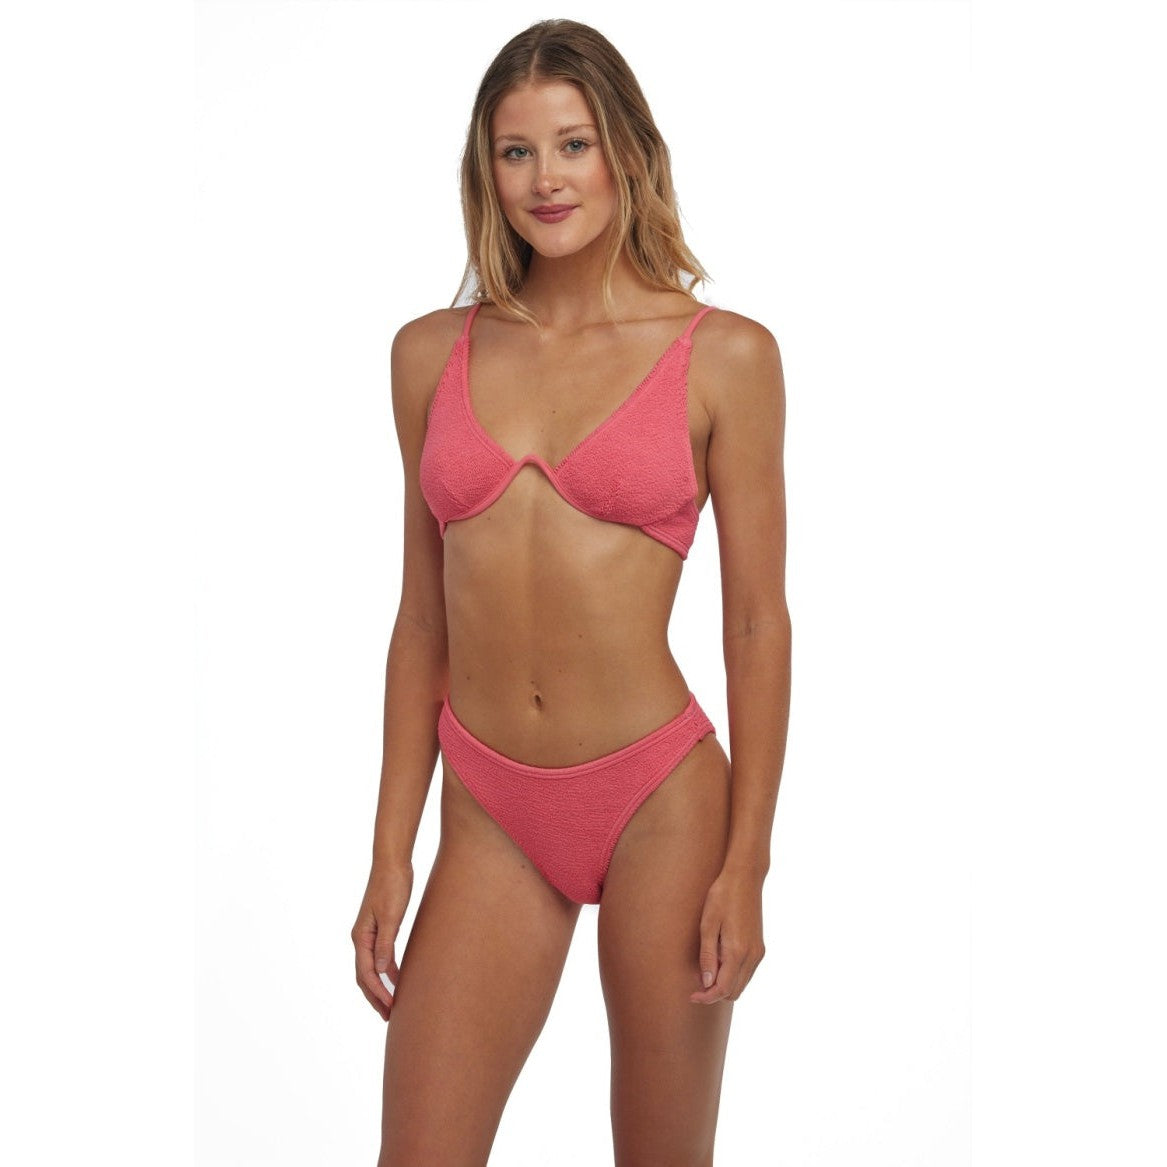 Bahamas One Size Bikini Top